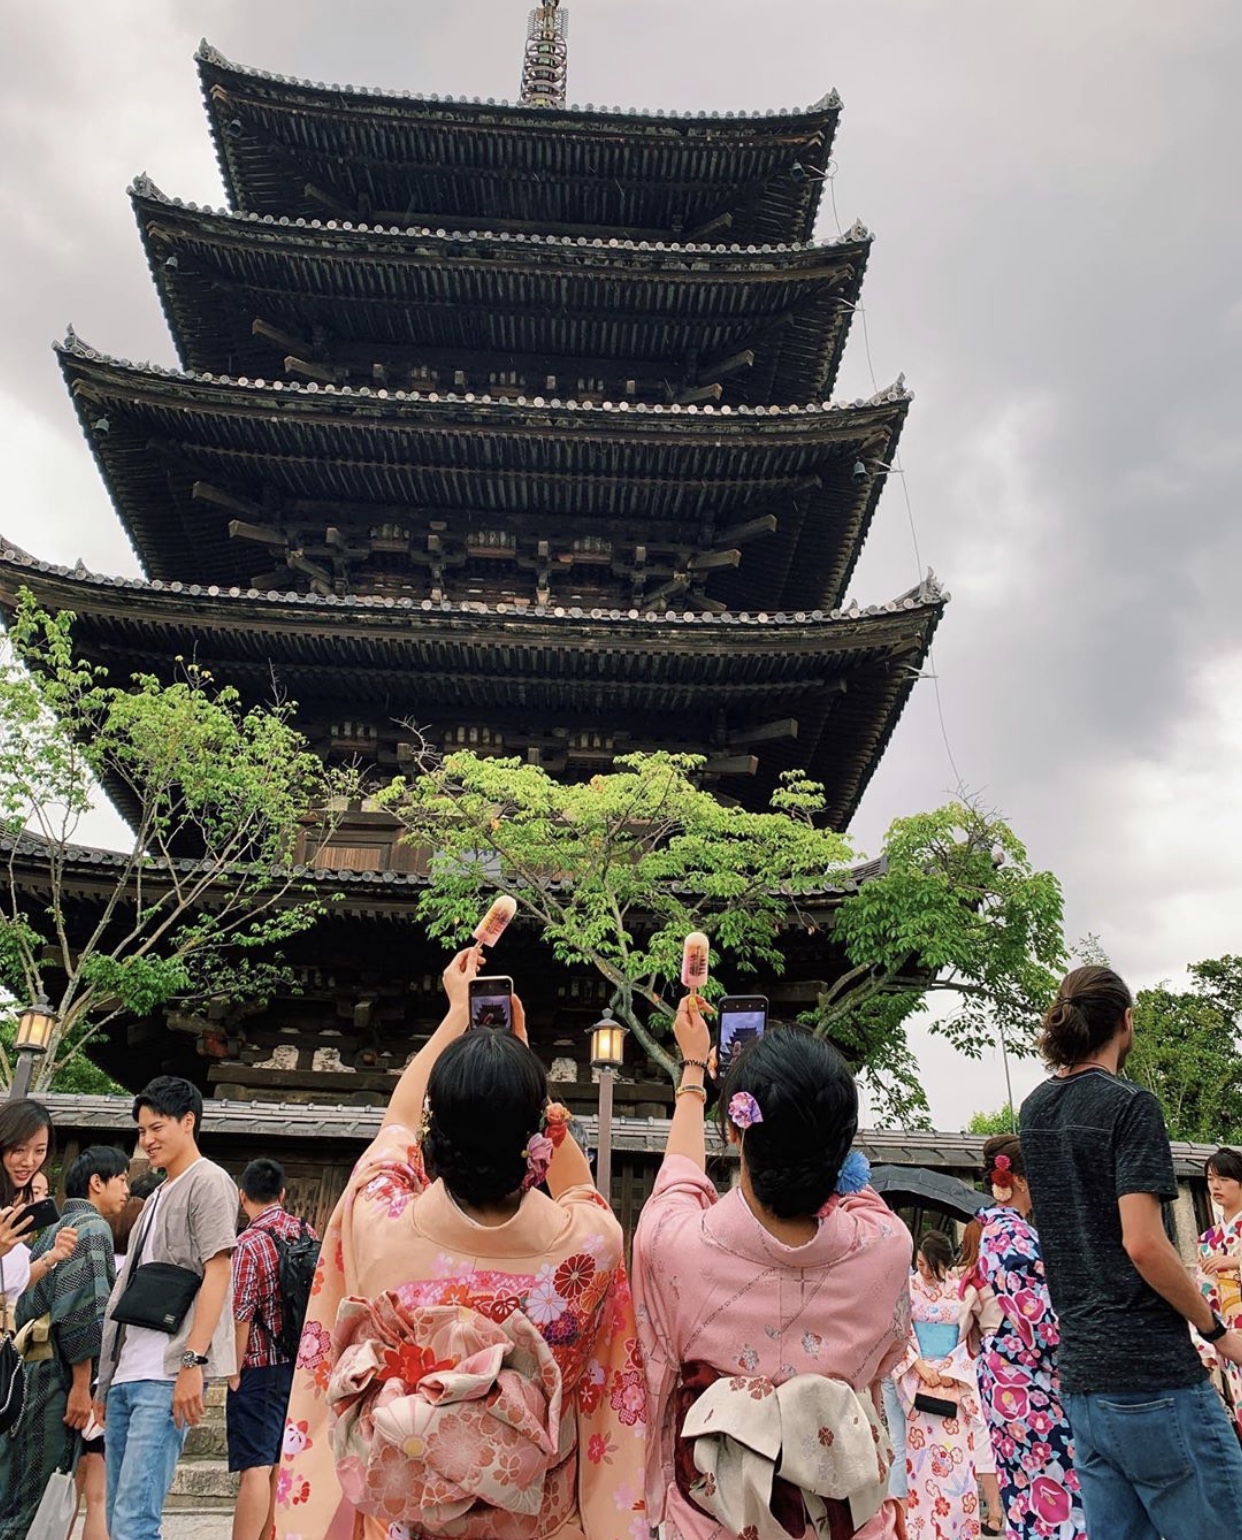 Emilee’s Photos From Kiyomizu-Dera Temple